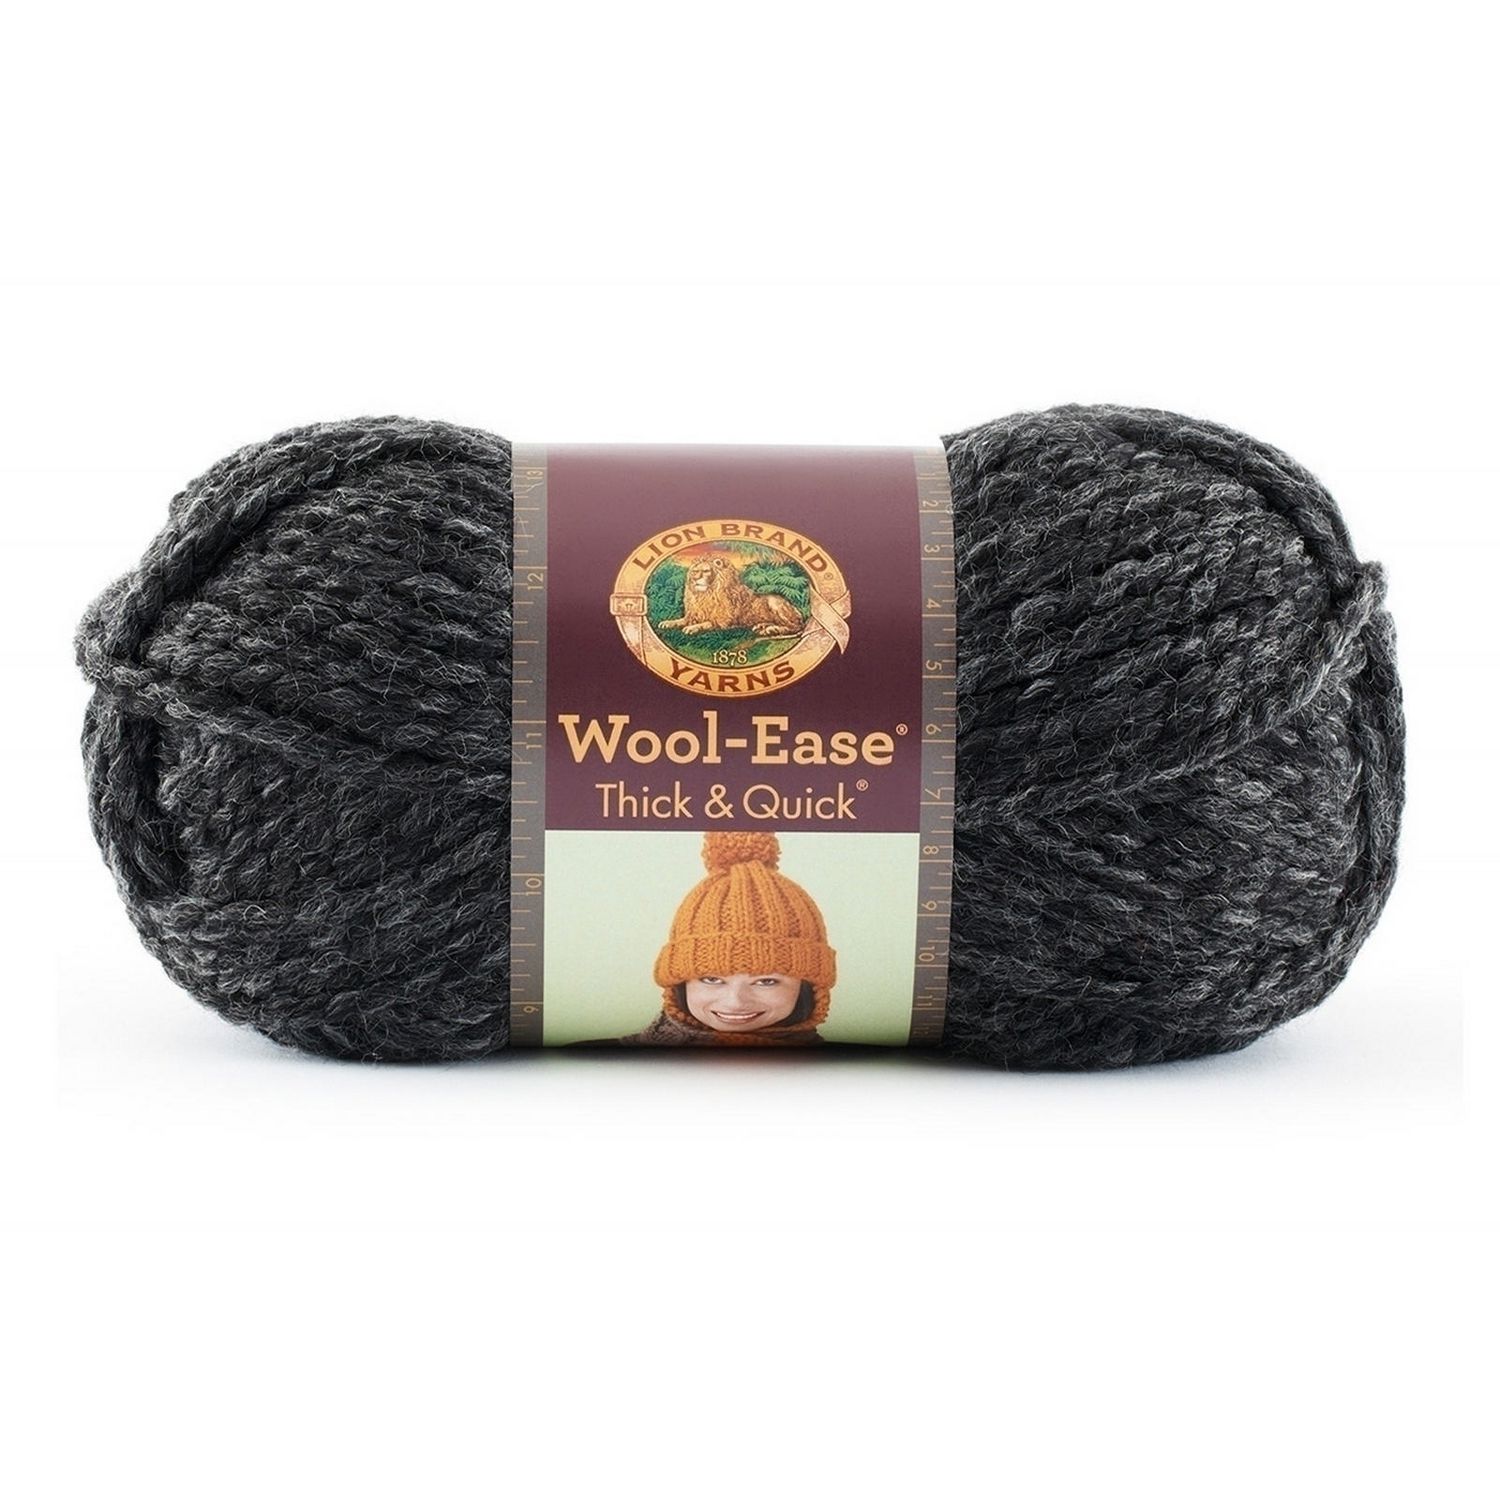 Lion Brand Wool Ease Thick & Quick yarn, Spice Market, 1 skein (174 yds, 10  oz)